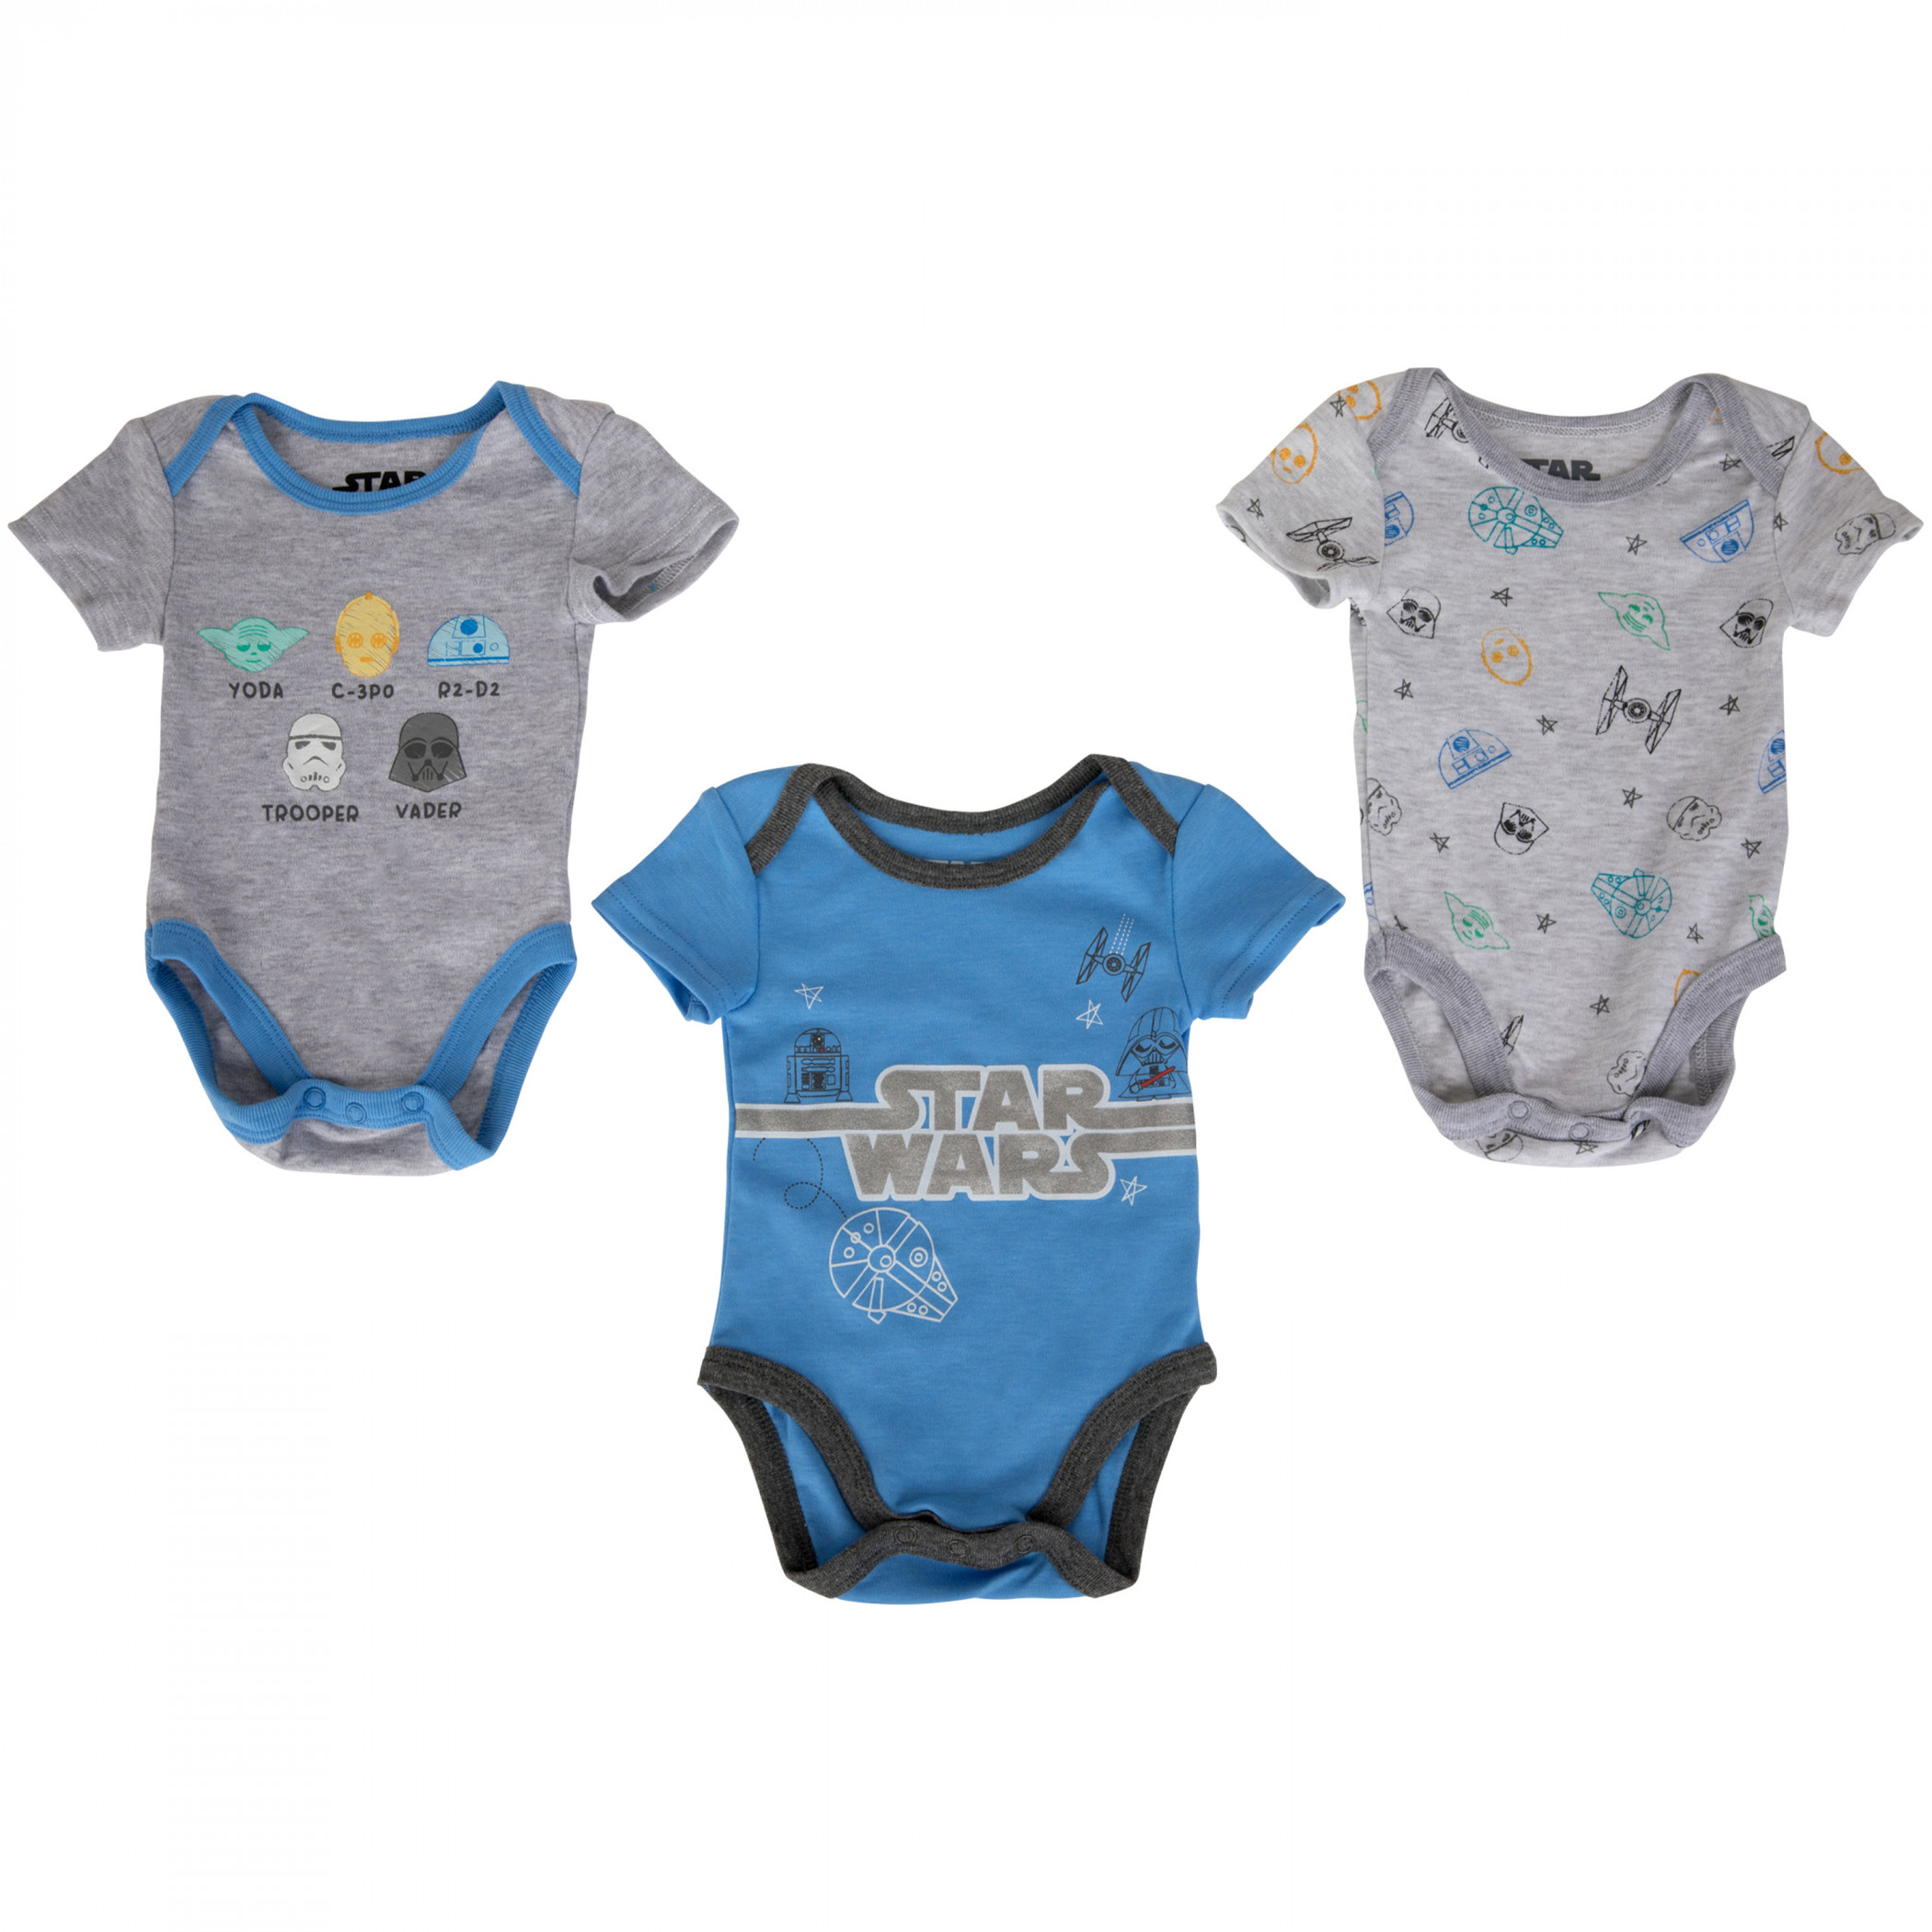 Star Wars Iconic Symbols 3-Pack Infant Bodysuit Set